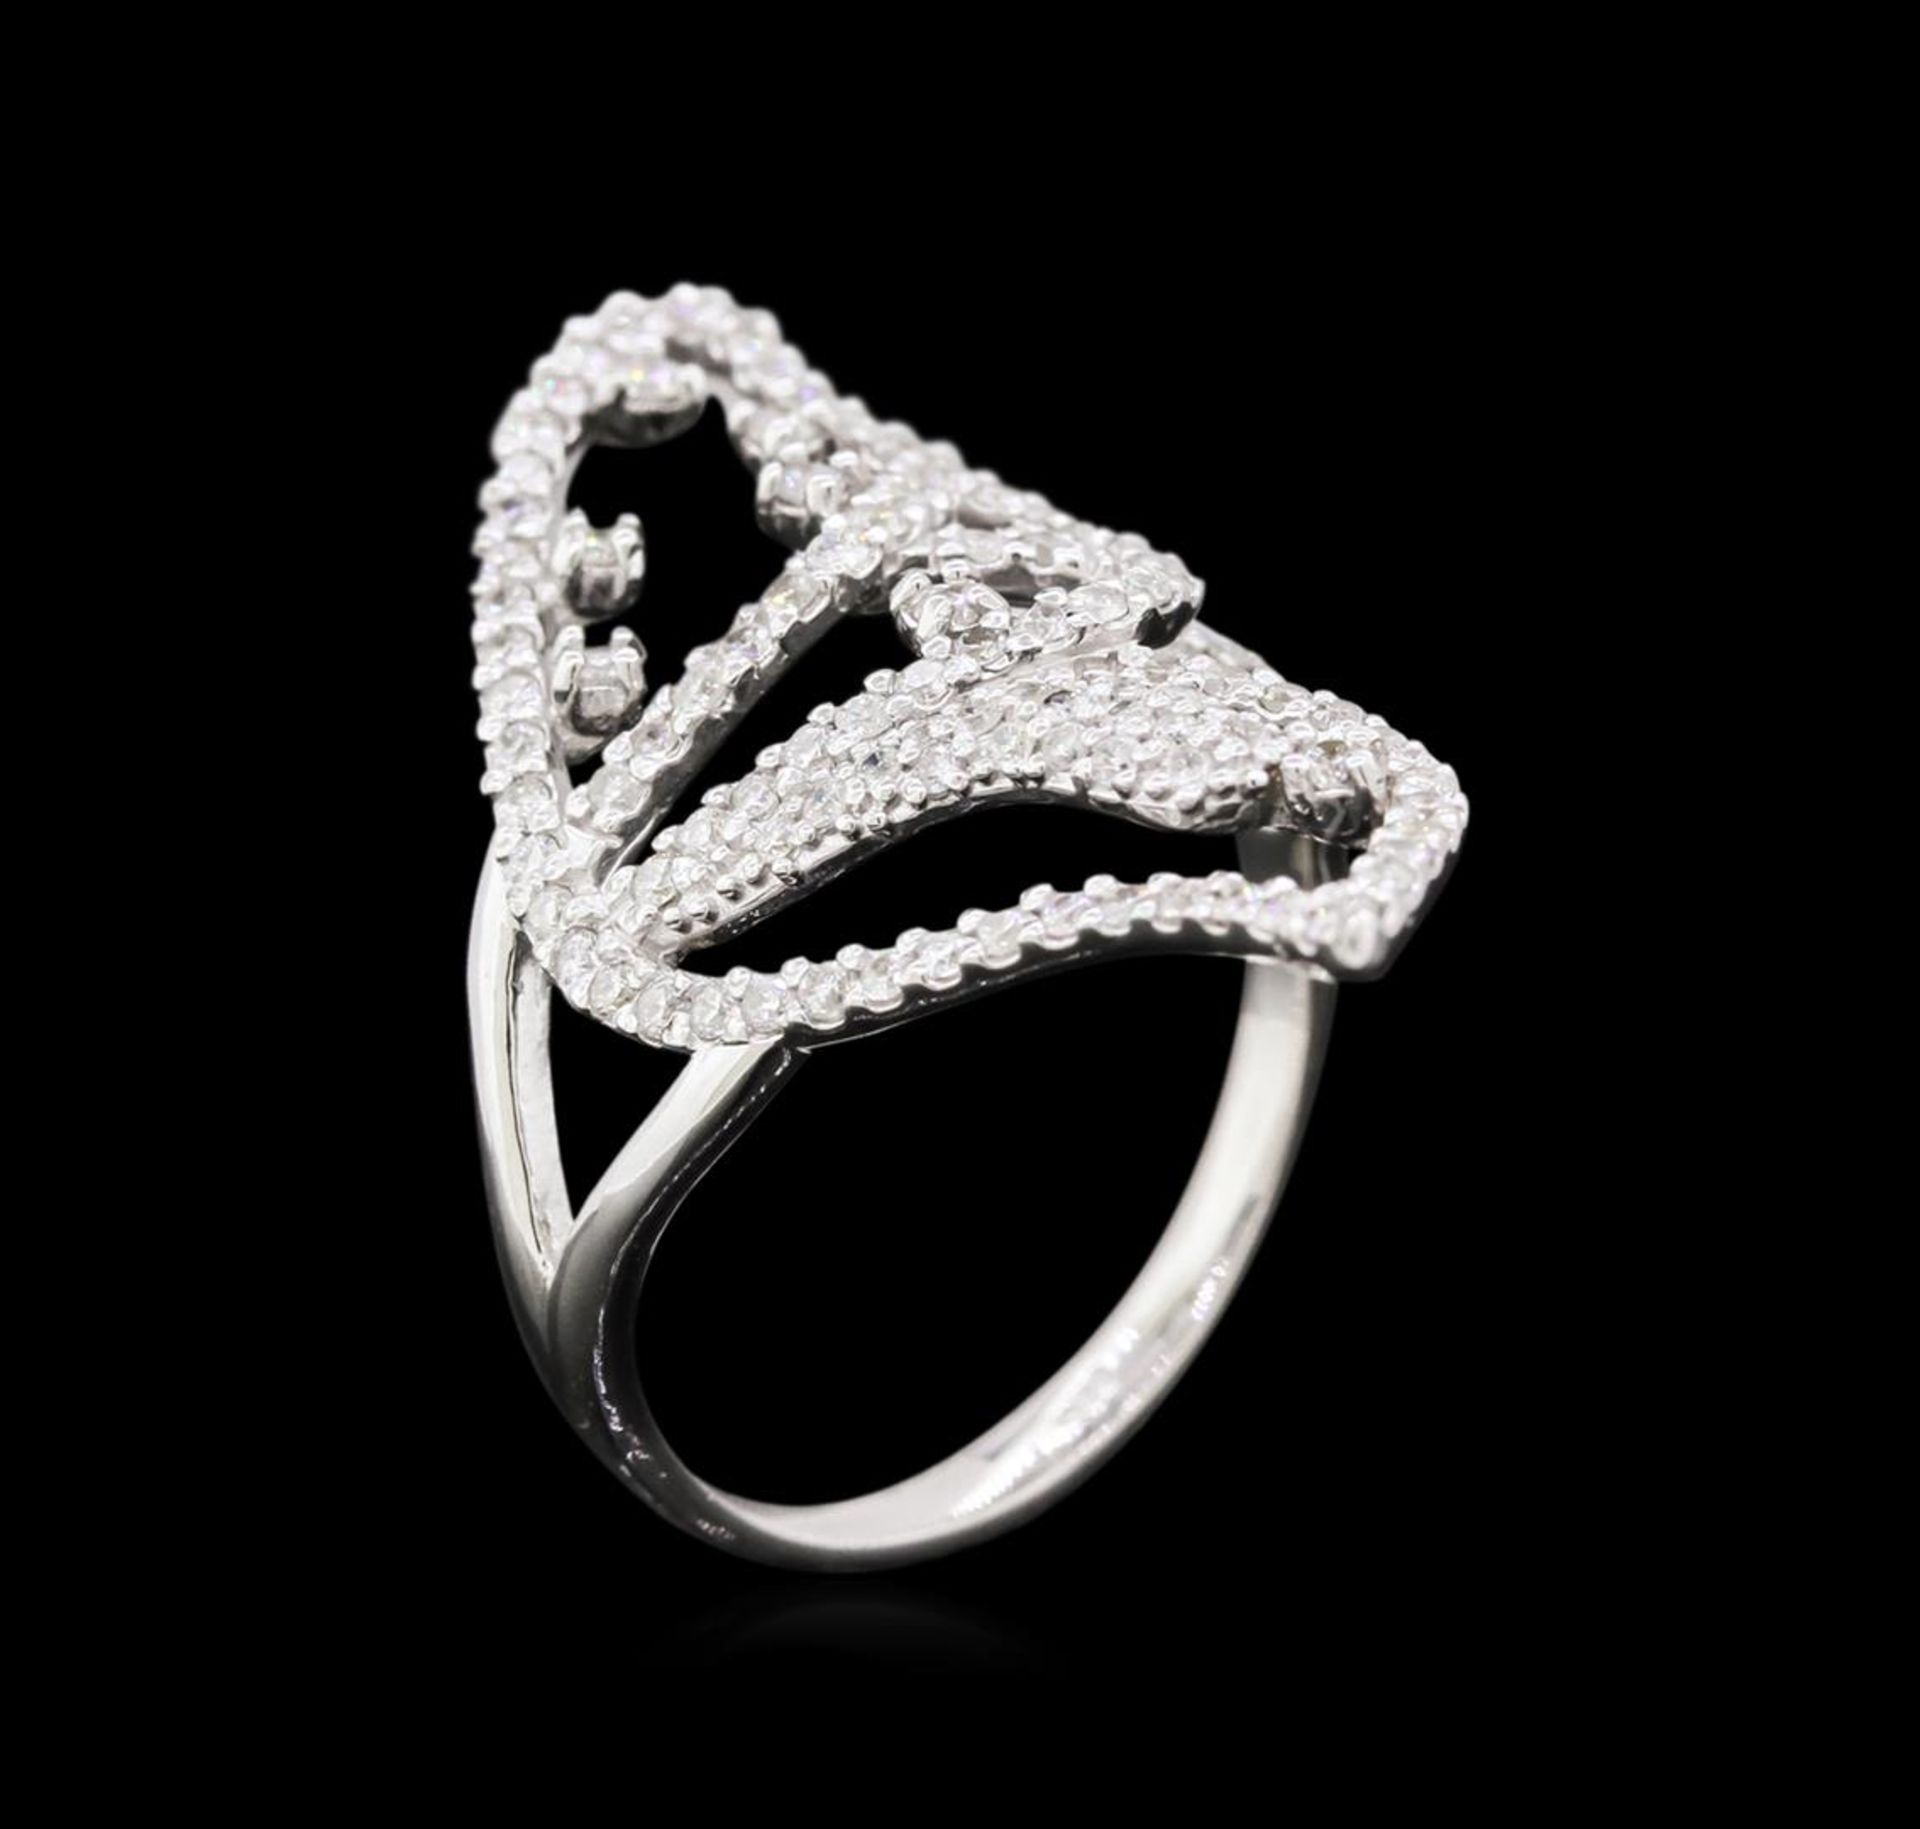 0.75 ctw Diamond Ring - 14KT White Gold - Image 3 of 3